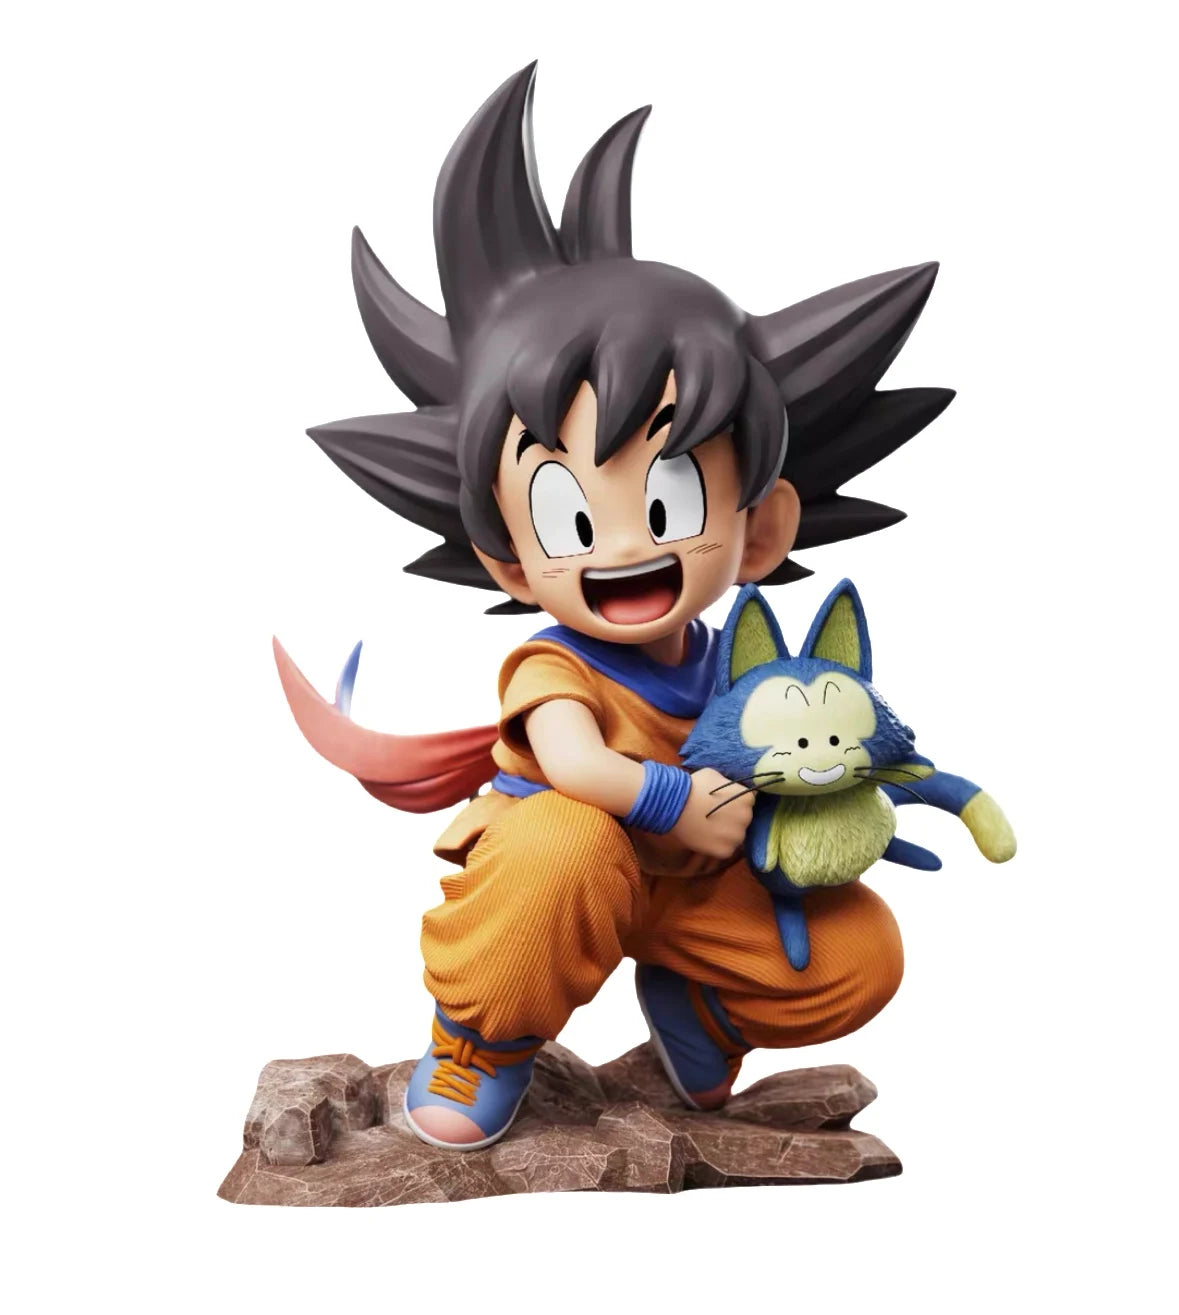 Dragon Ball Childhood Son Goku Hold on Puaru Cute Anime Figure Kakarotto GK Model Decoration Collection Figurine Toy Kids Gifts Son Goku 12cm